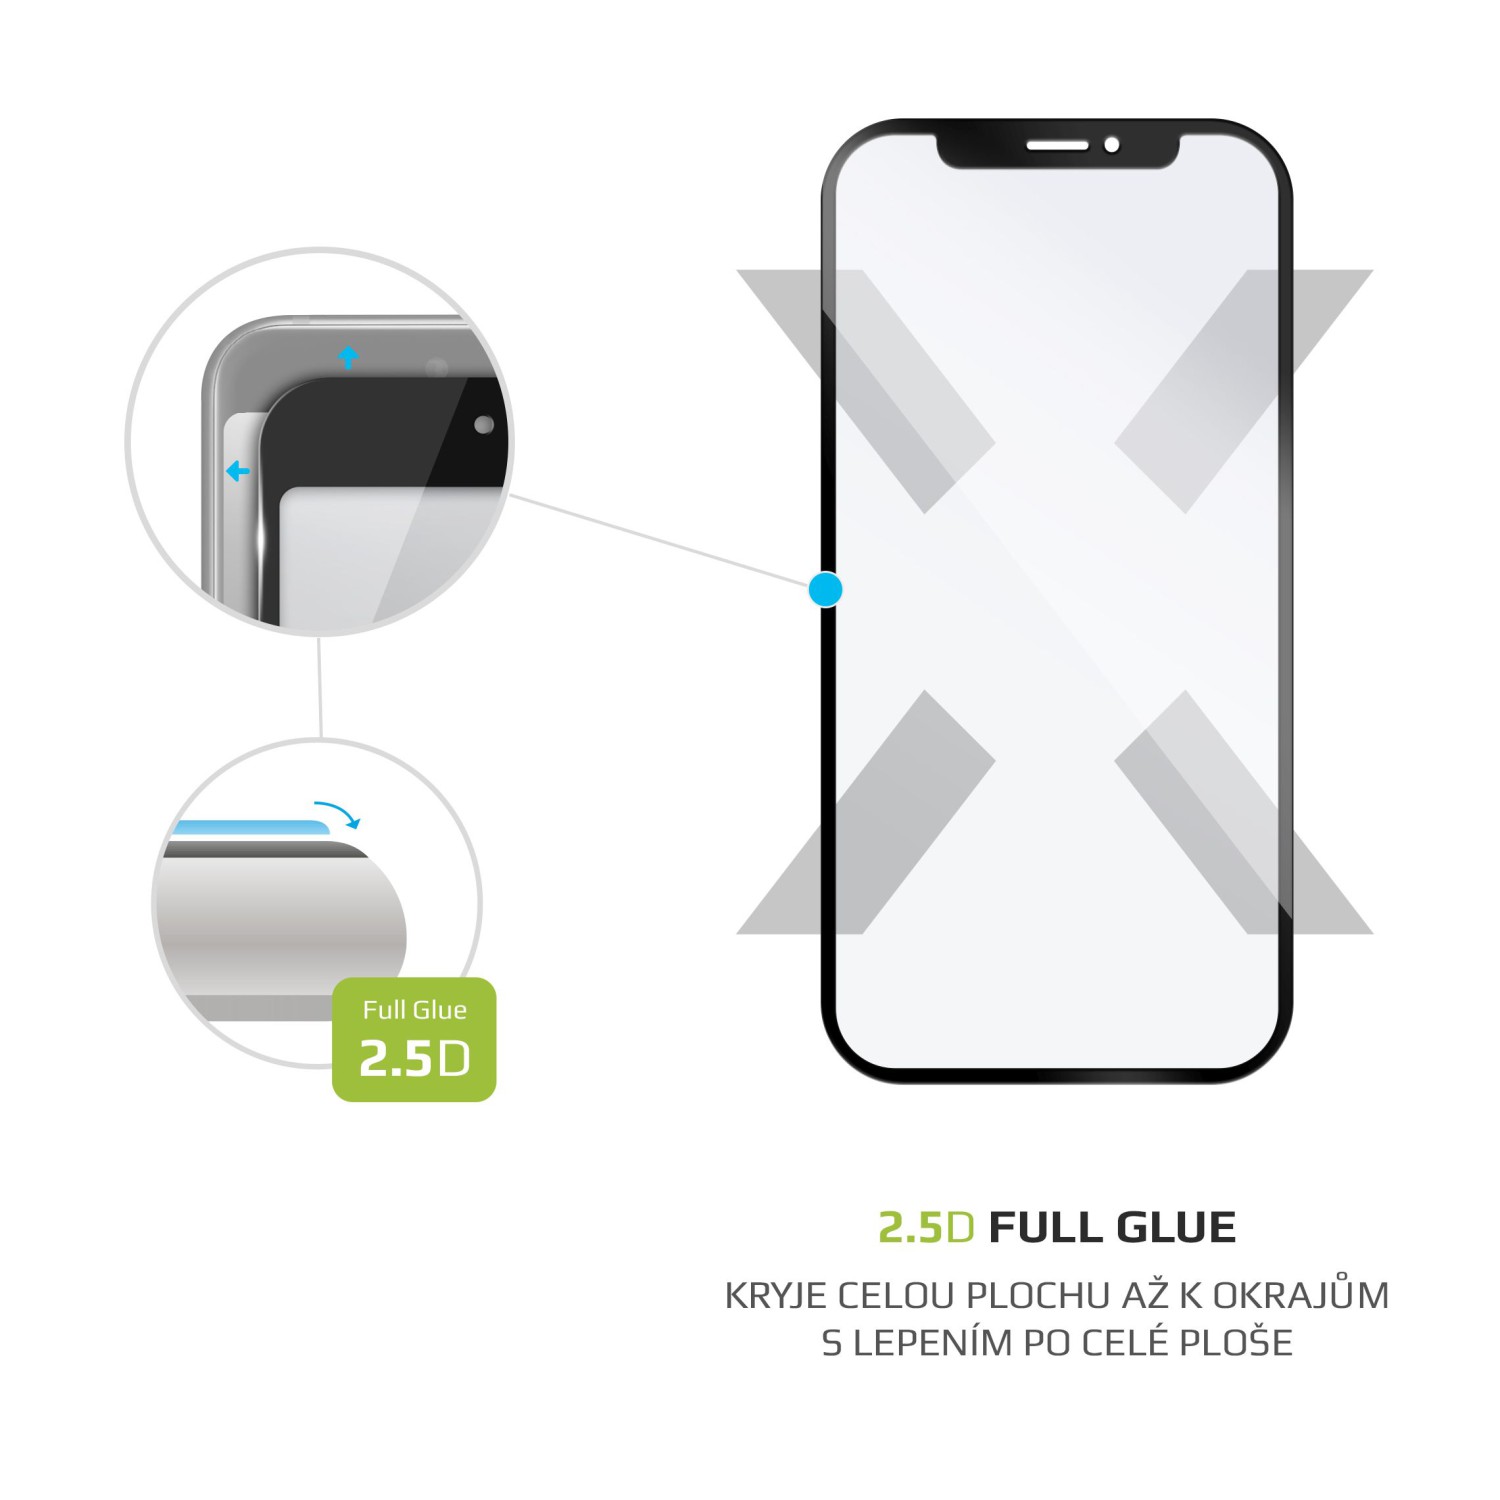 Tvrdené sklo FIXED Full-Cover pre OnePlus Nord 3, čierna